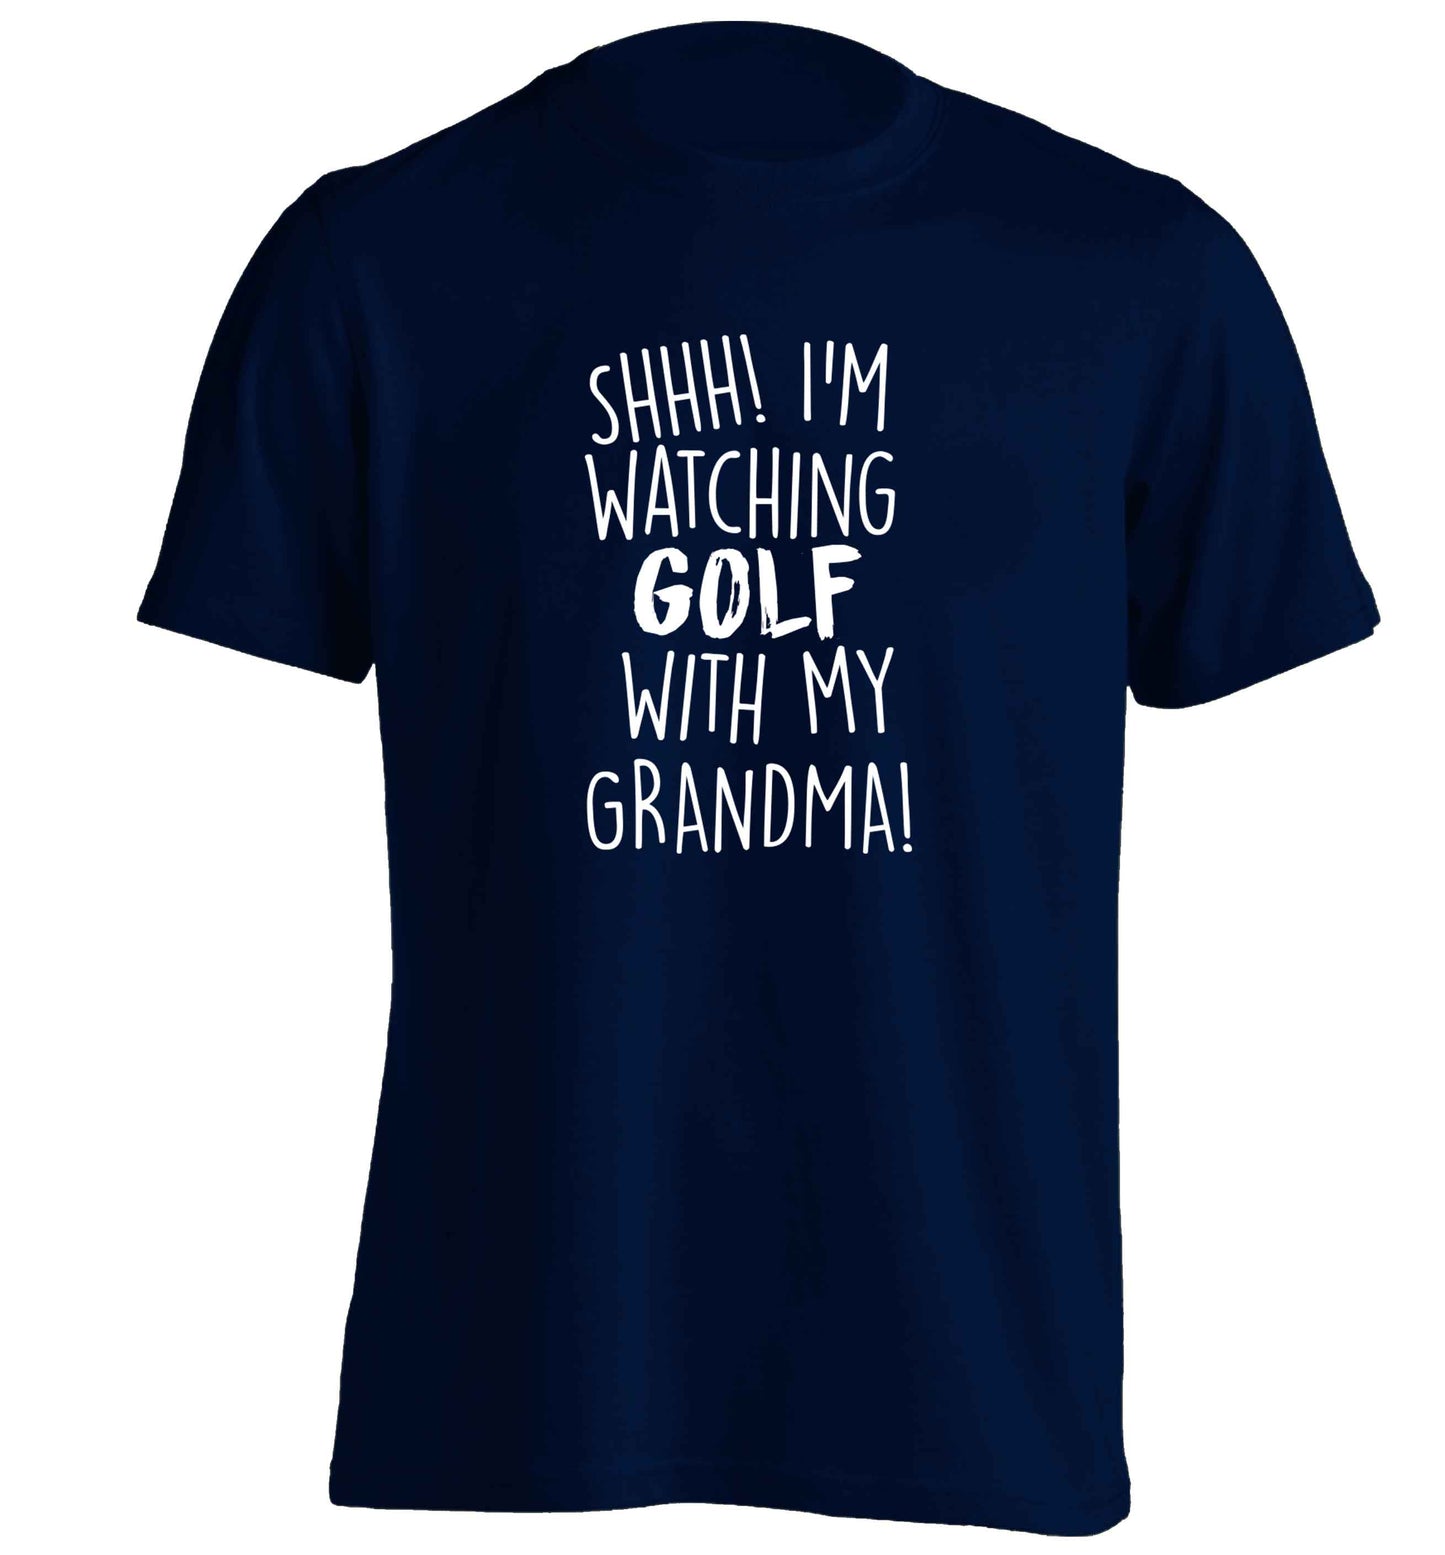 Shh I'm watching golf with my grandma adults unisex navy Tshirt 2XL